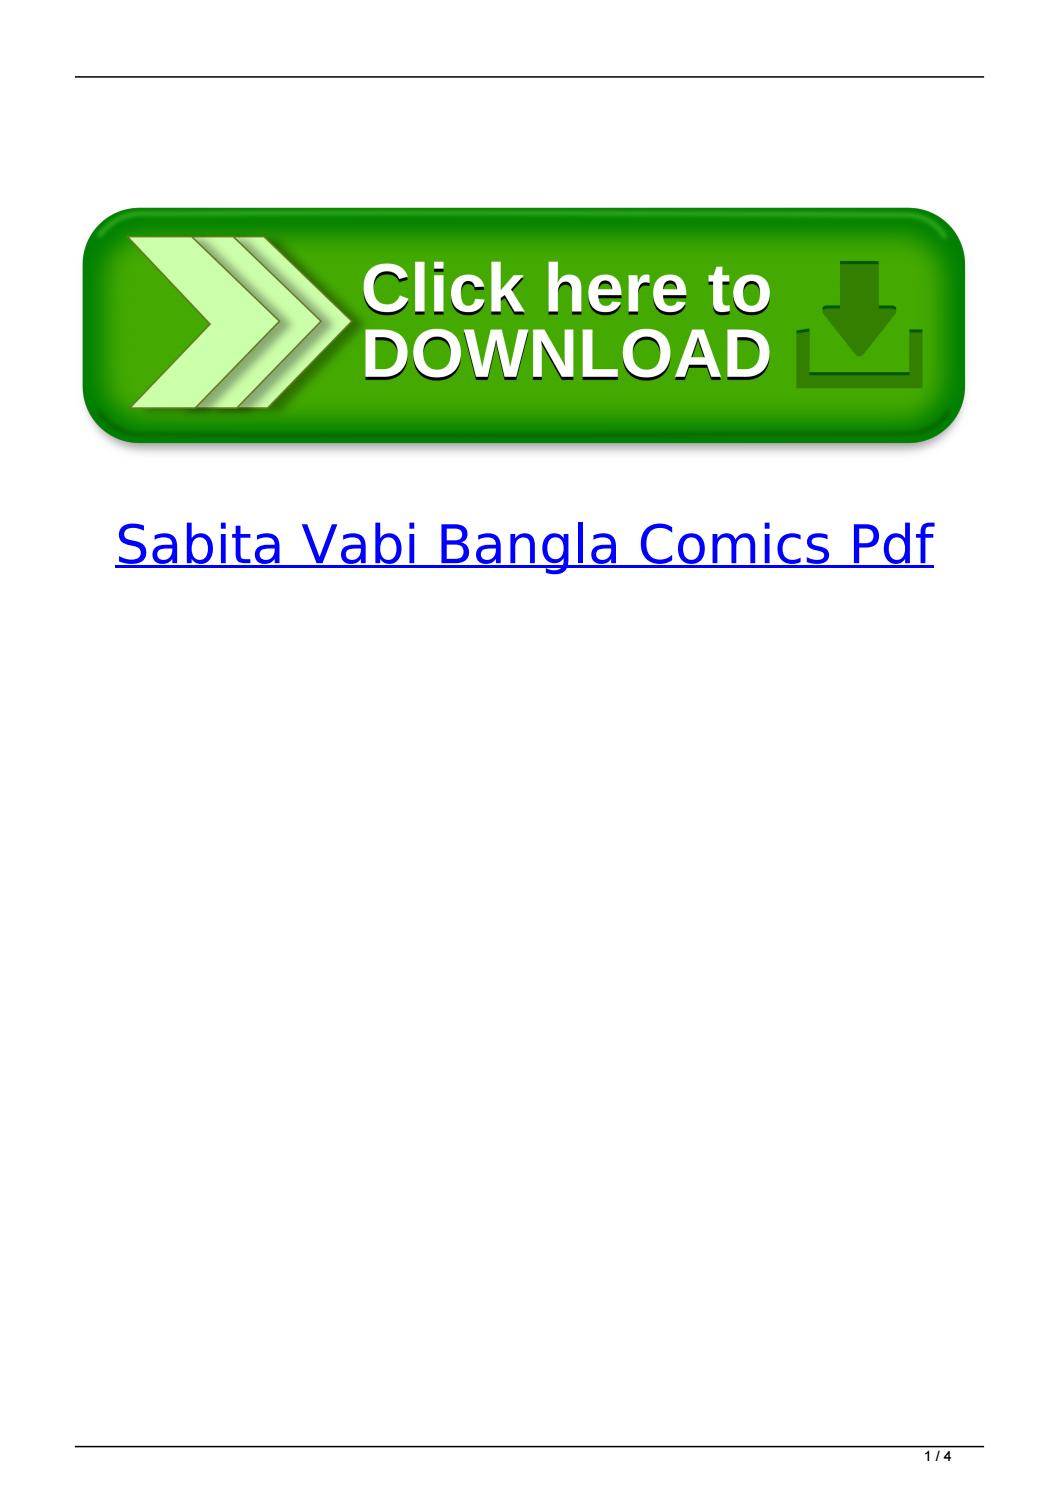 Sabita vabi pdf bengali